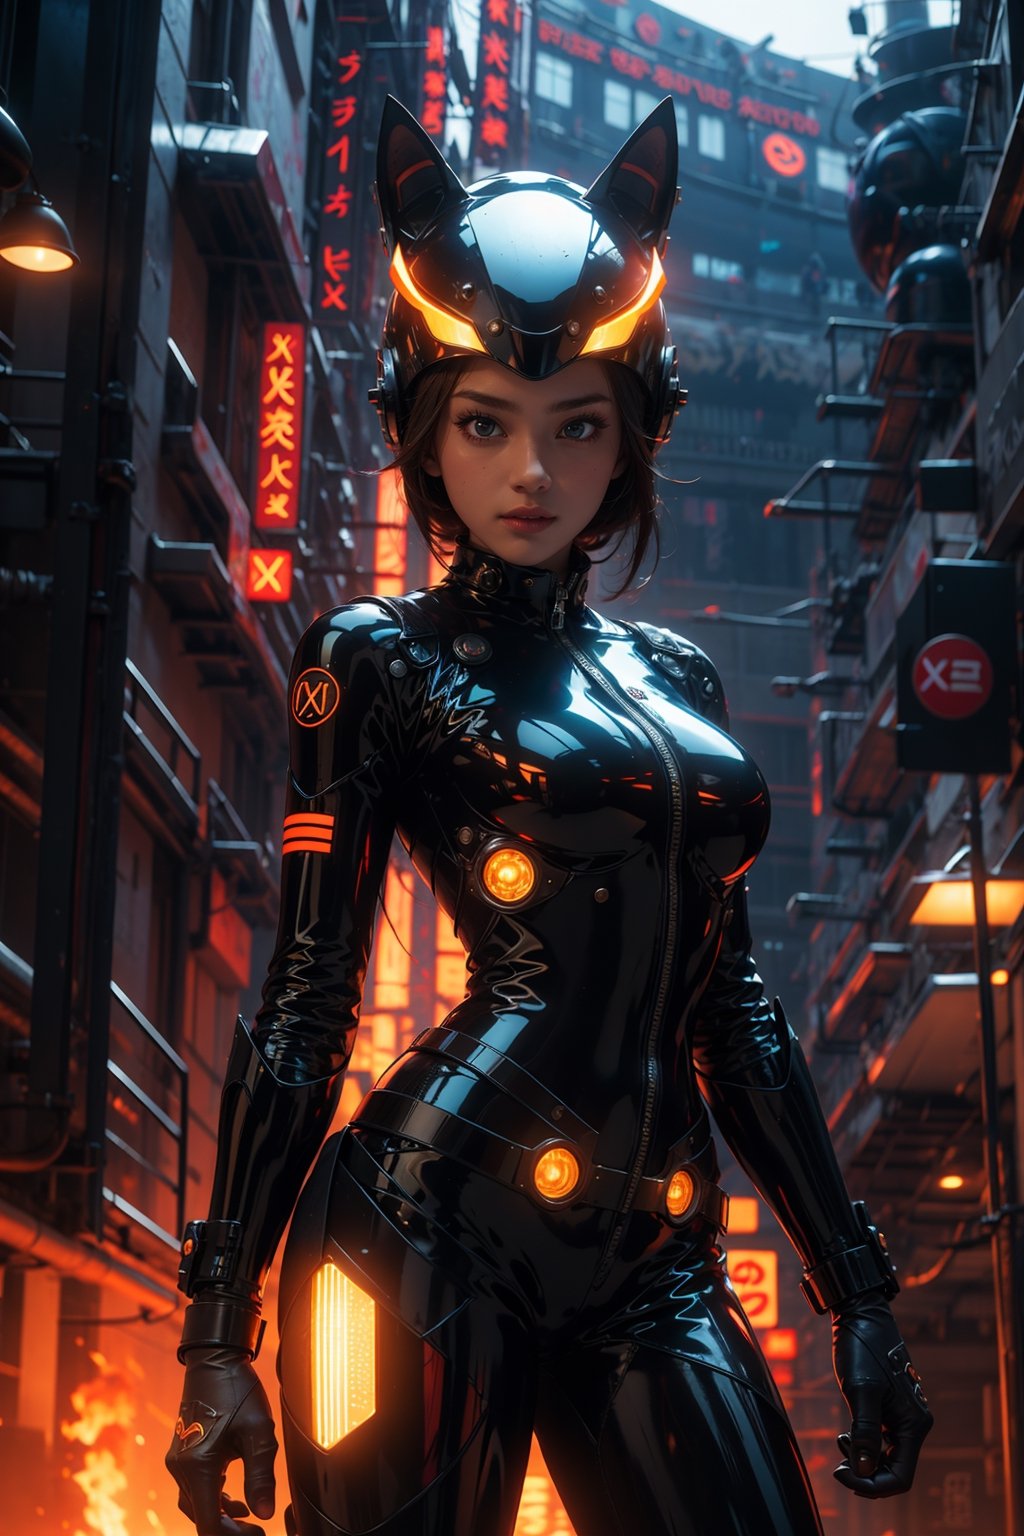 r1ge, Futuristic girl, female alien suit, motox fox helmet, detailed, ultra HD quality, hdr reflection, reflector light